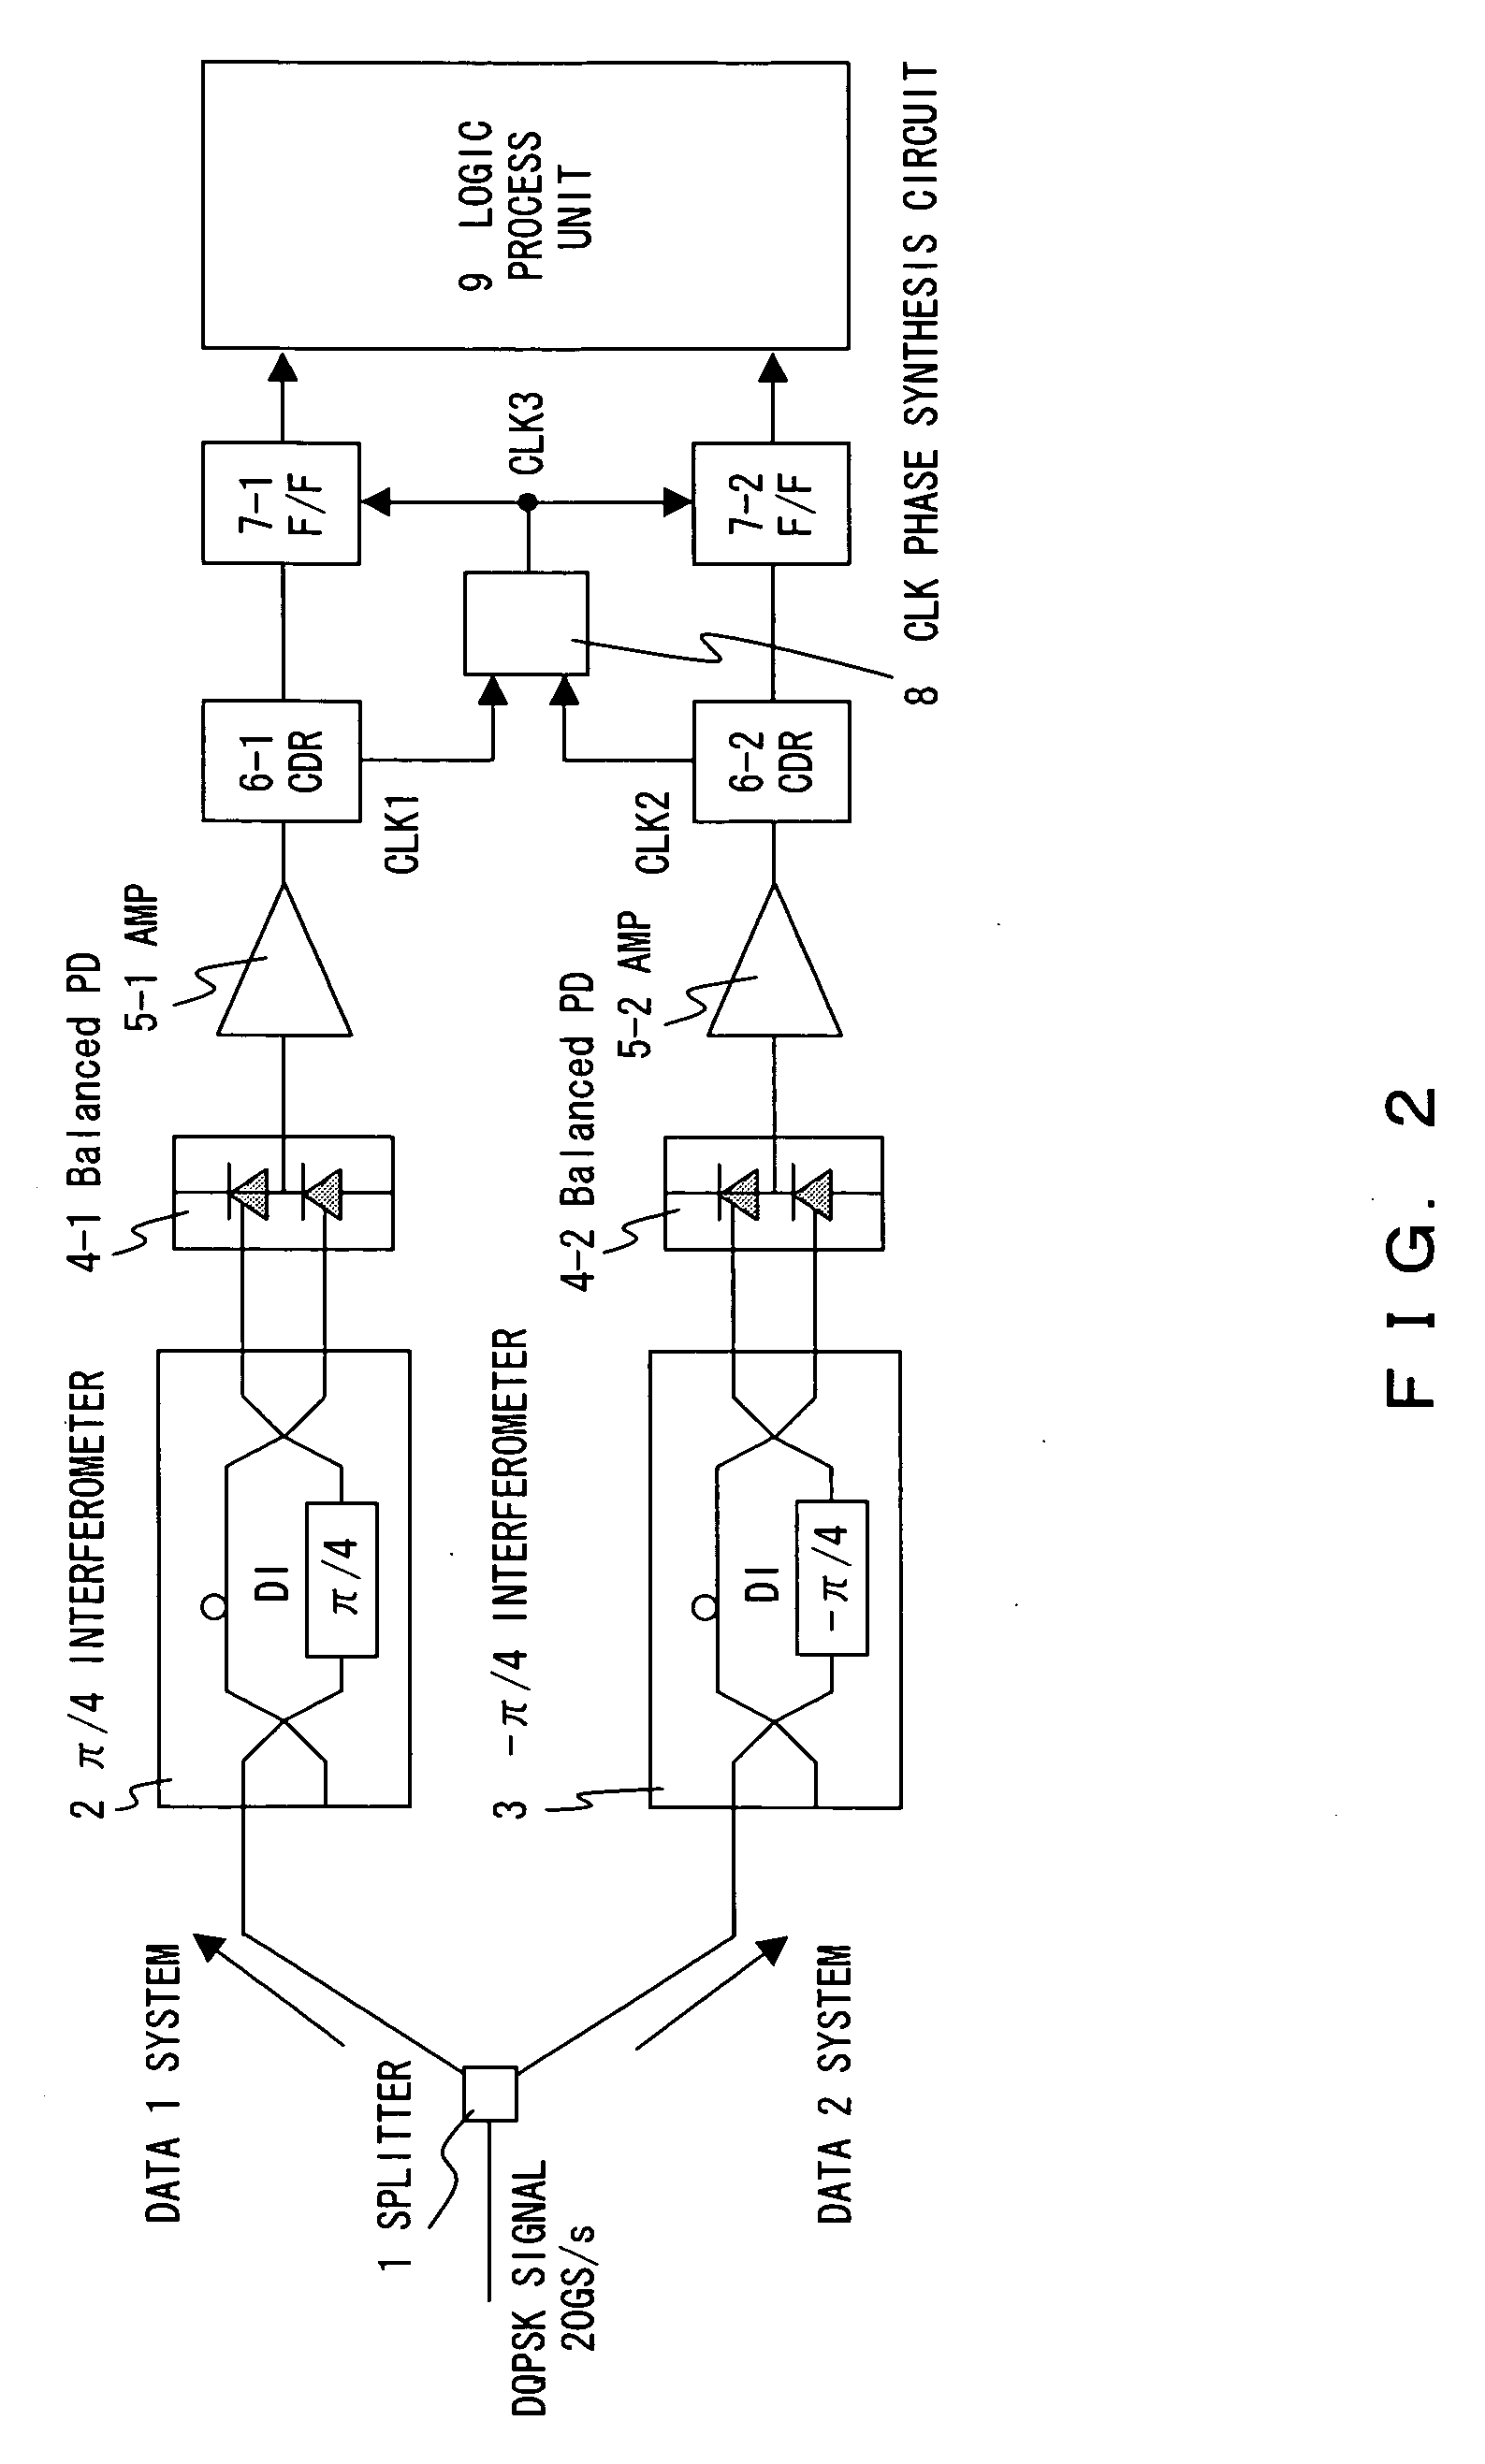 DQPSK optical receiver circuit